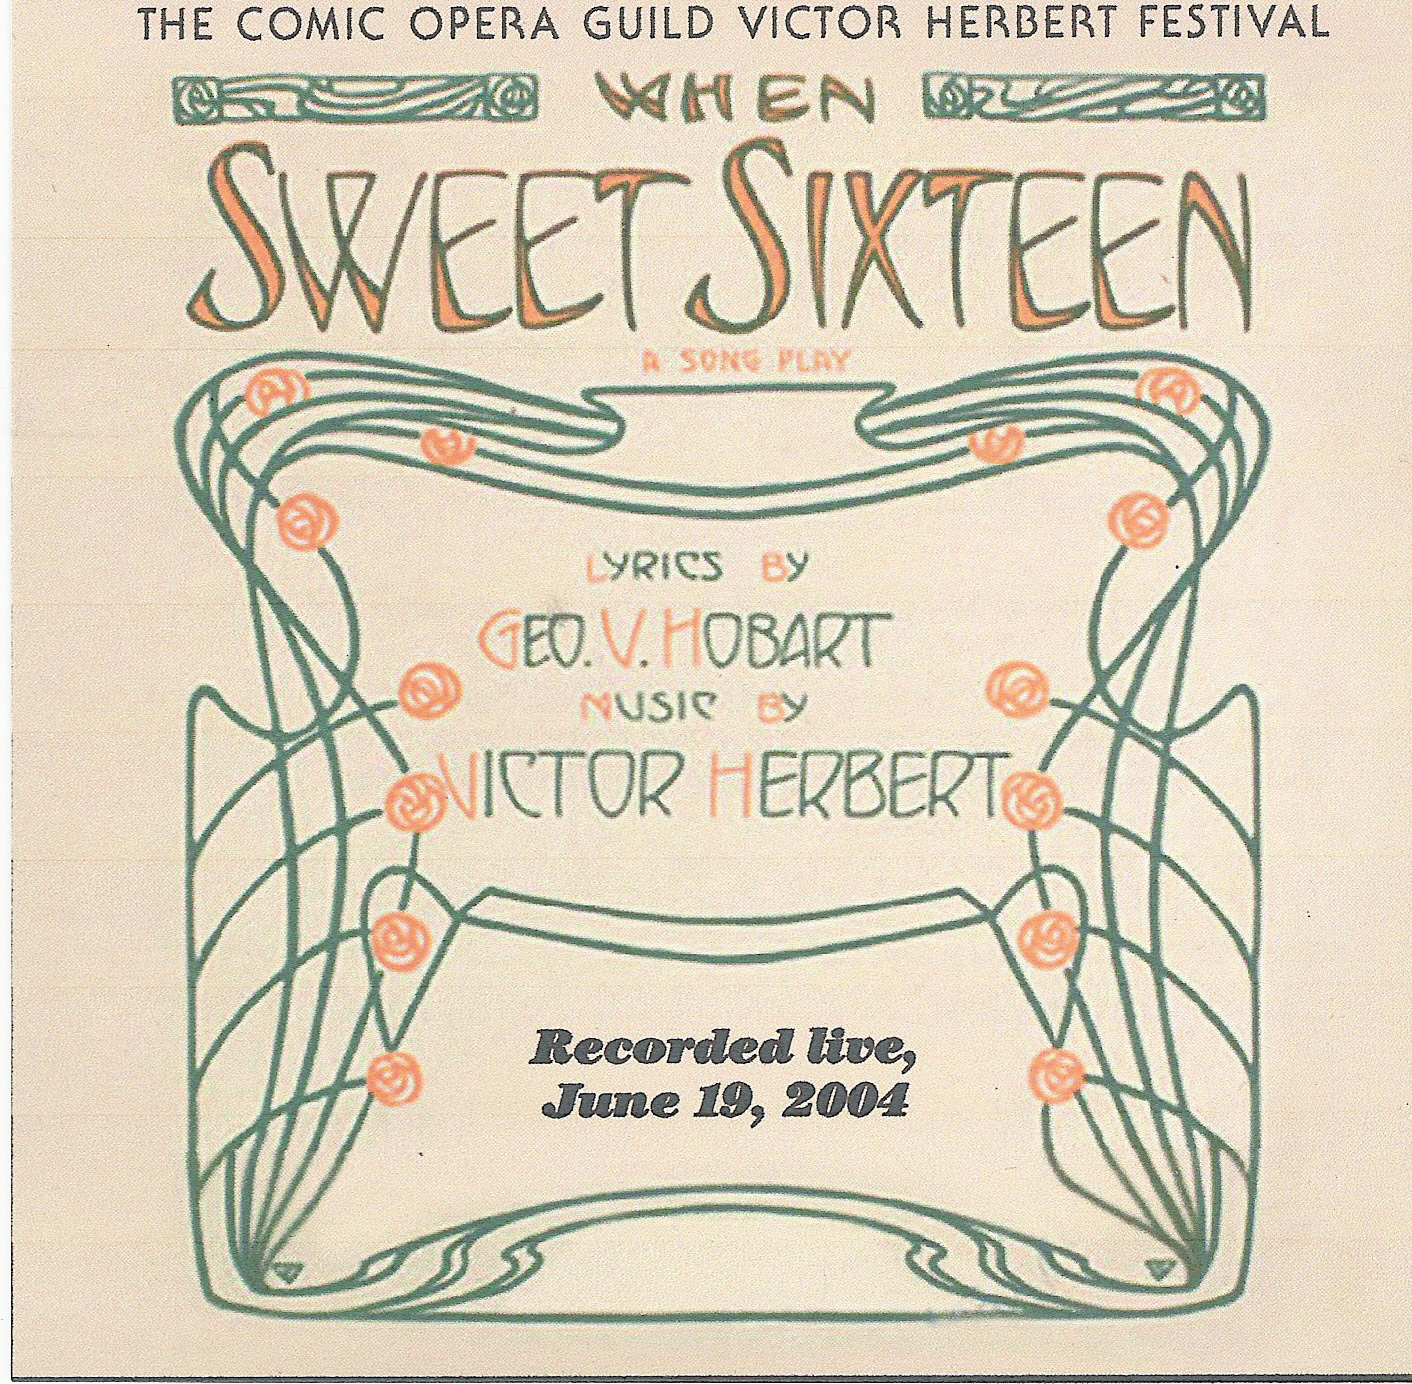 When Sweet Sixteen CD cover